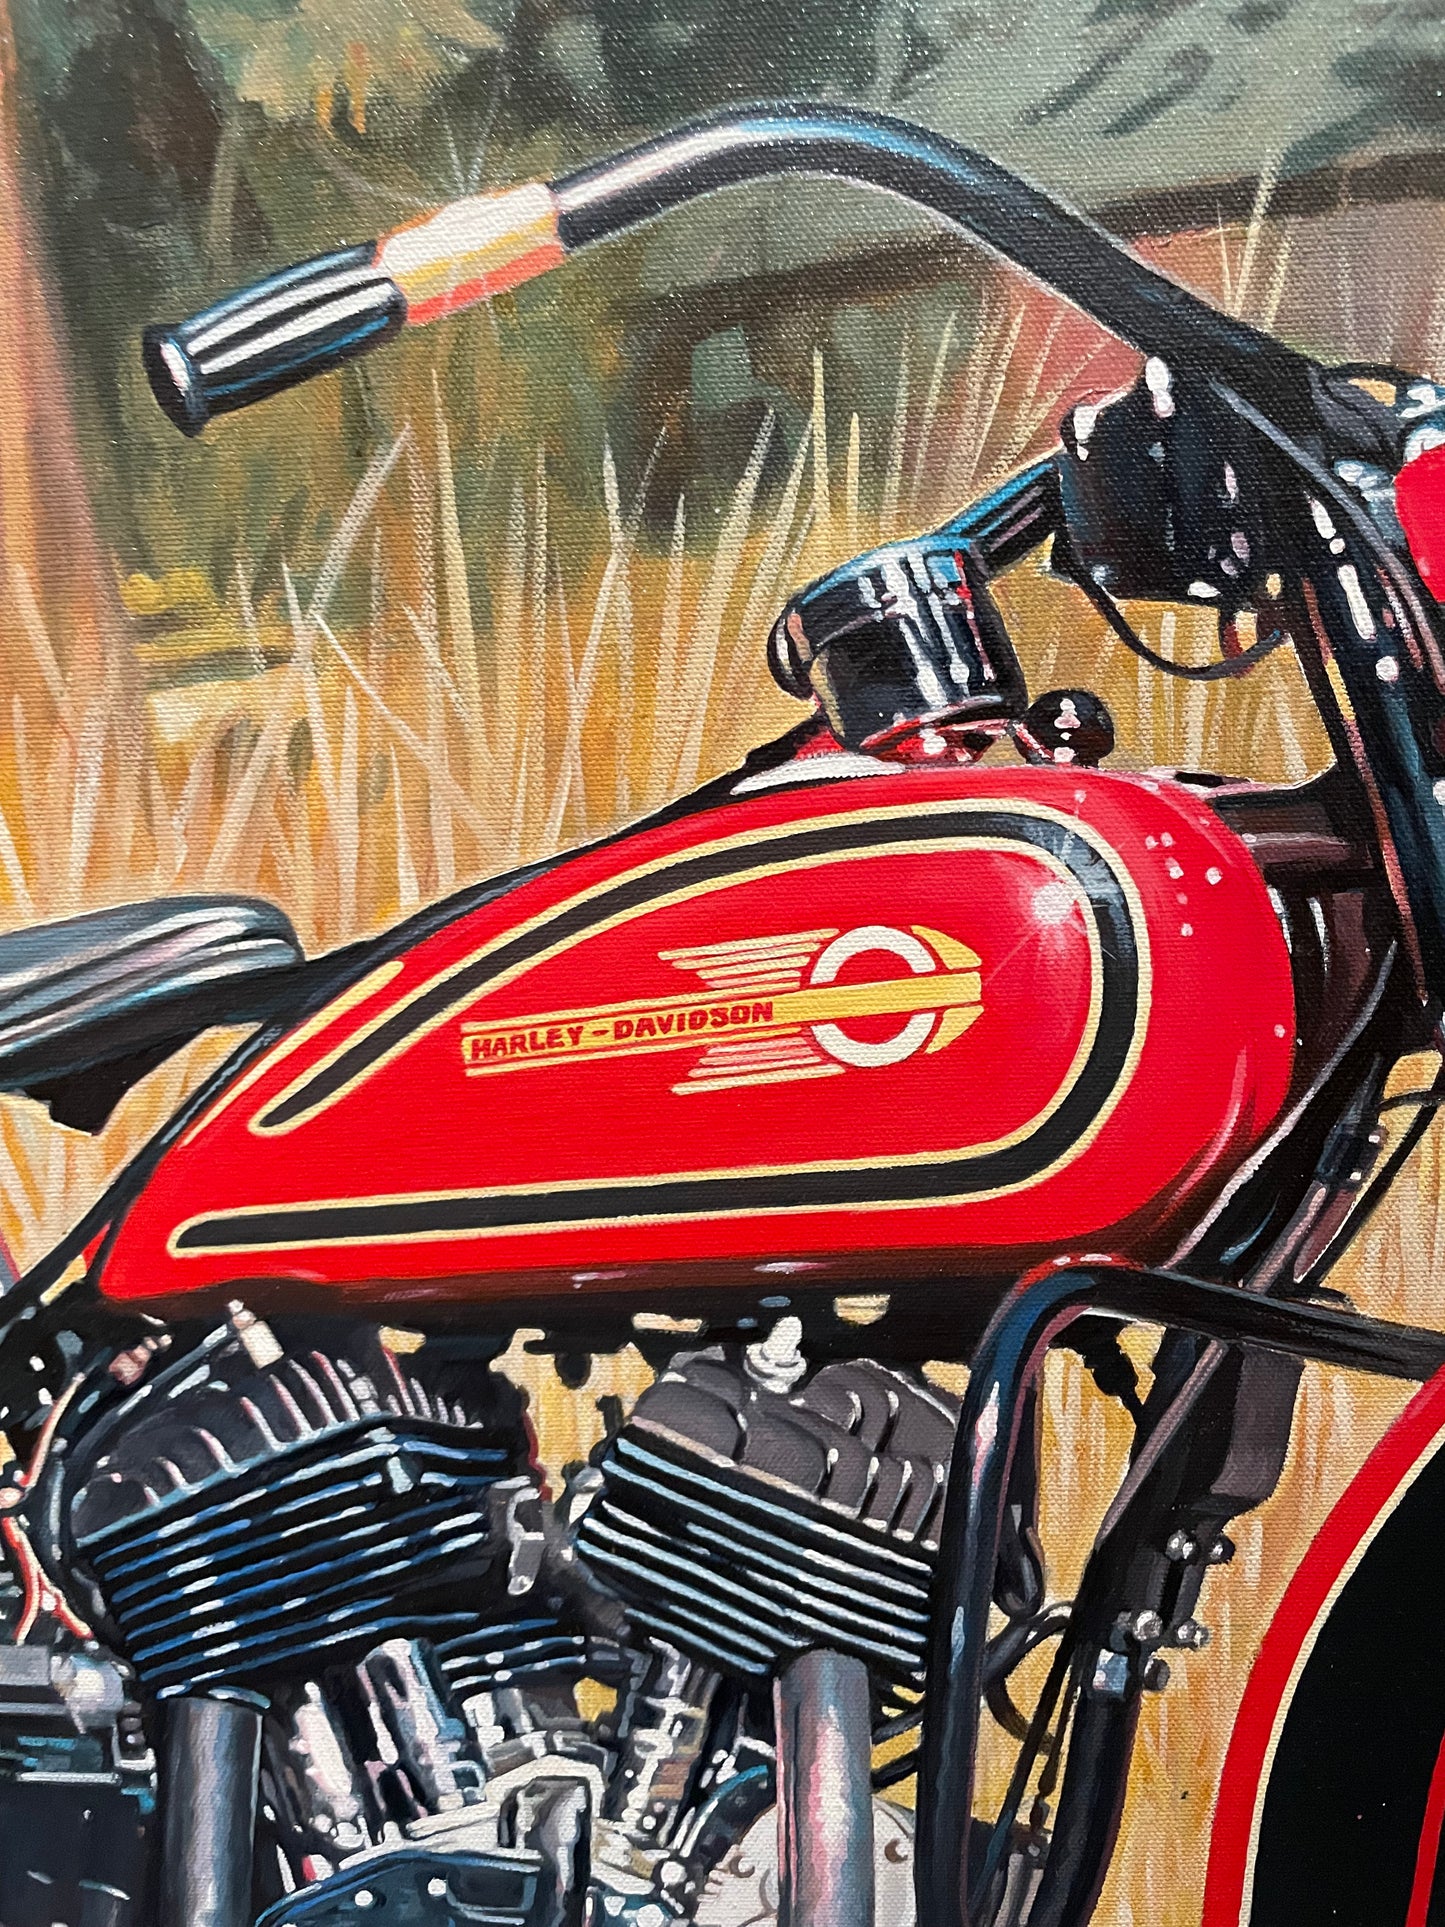 Gerald M.P 'Harley Davidson' 1953